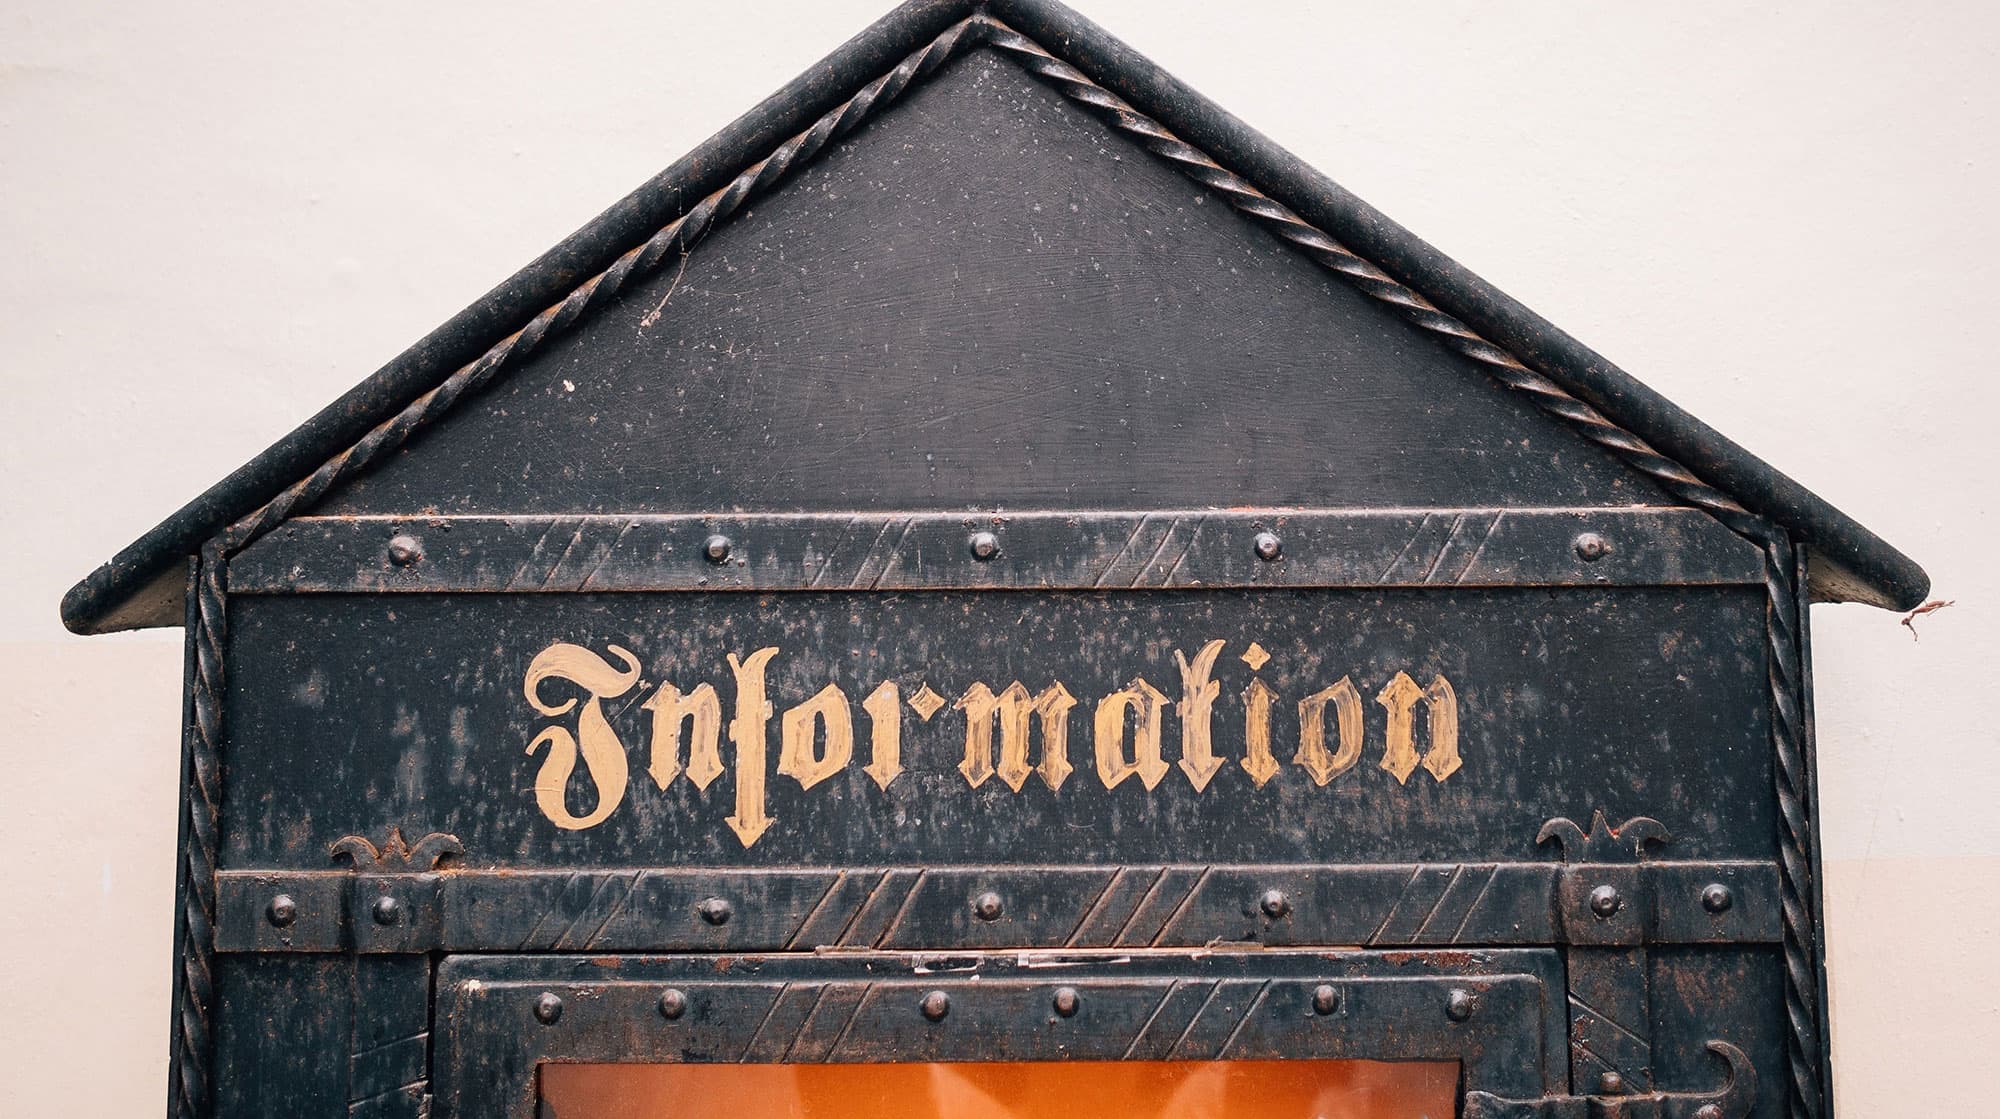 Da Information ad Innovation. CIO is the new CIO